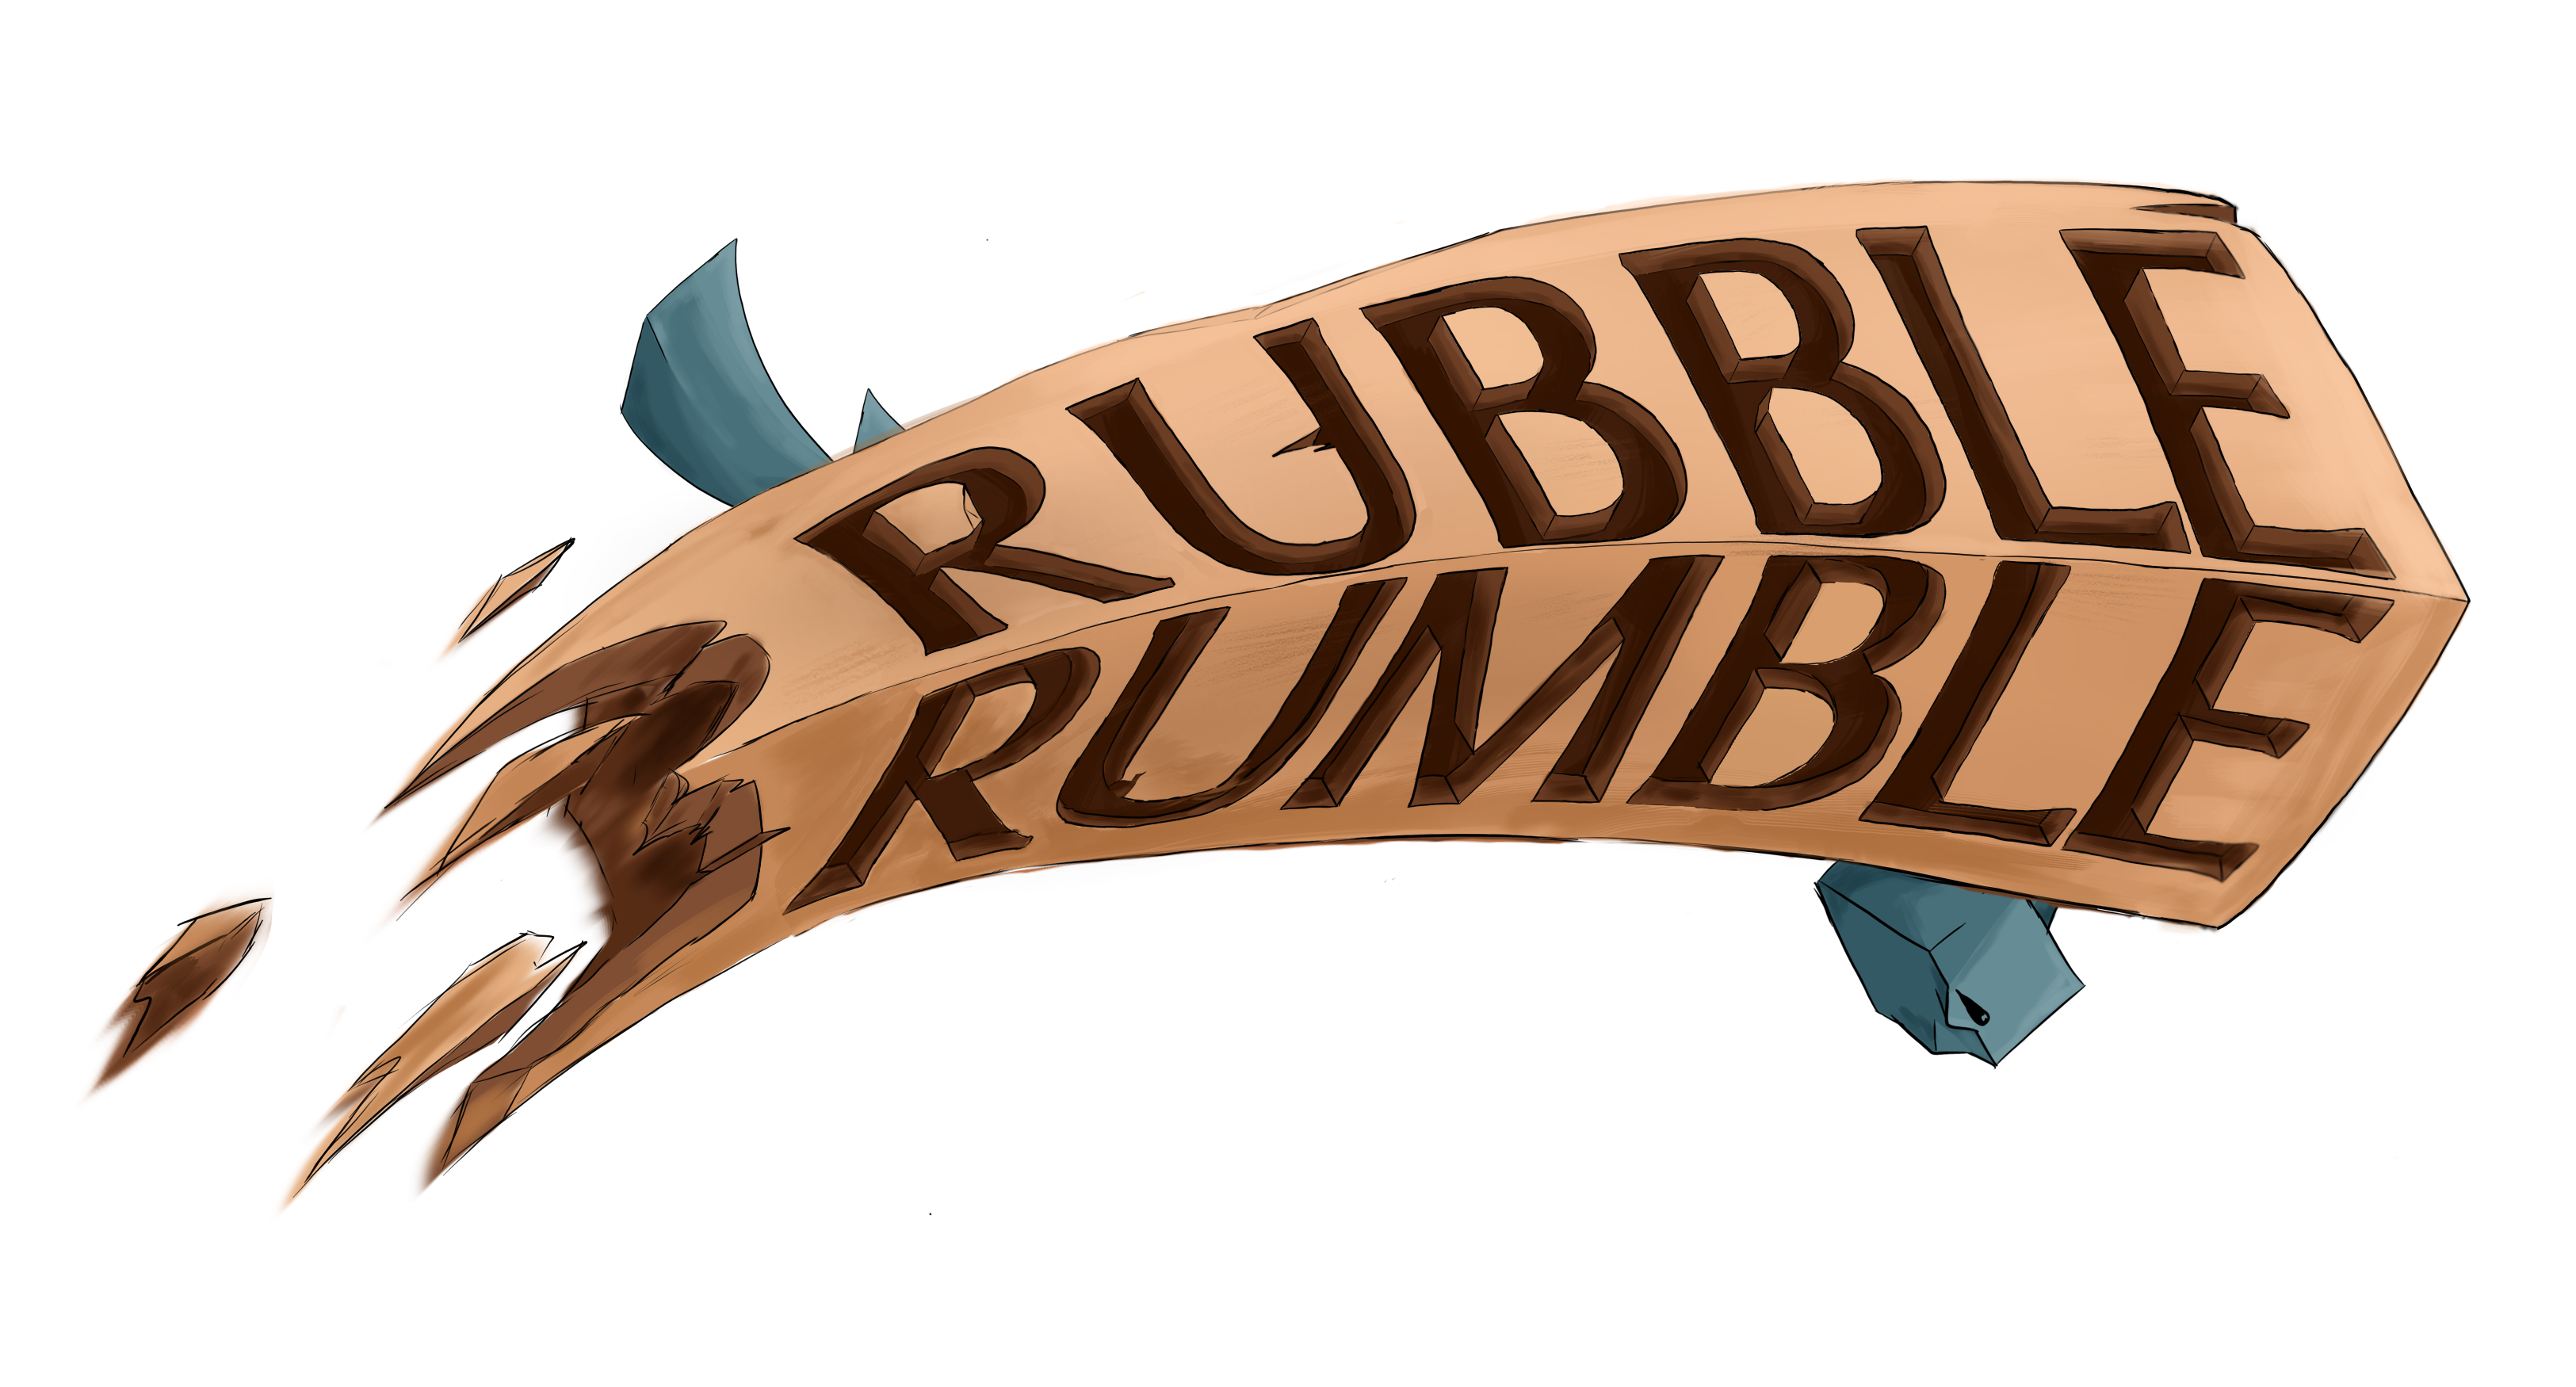 Rubble Rumble